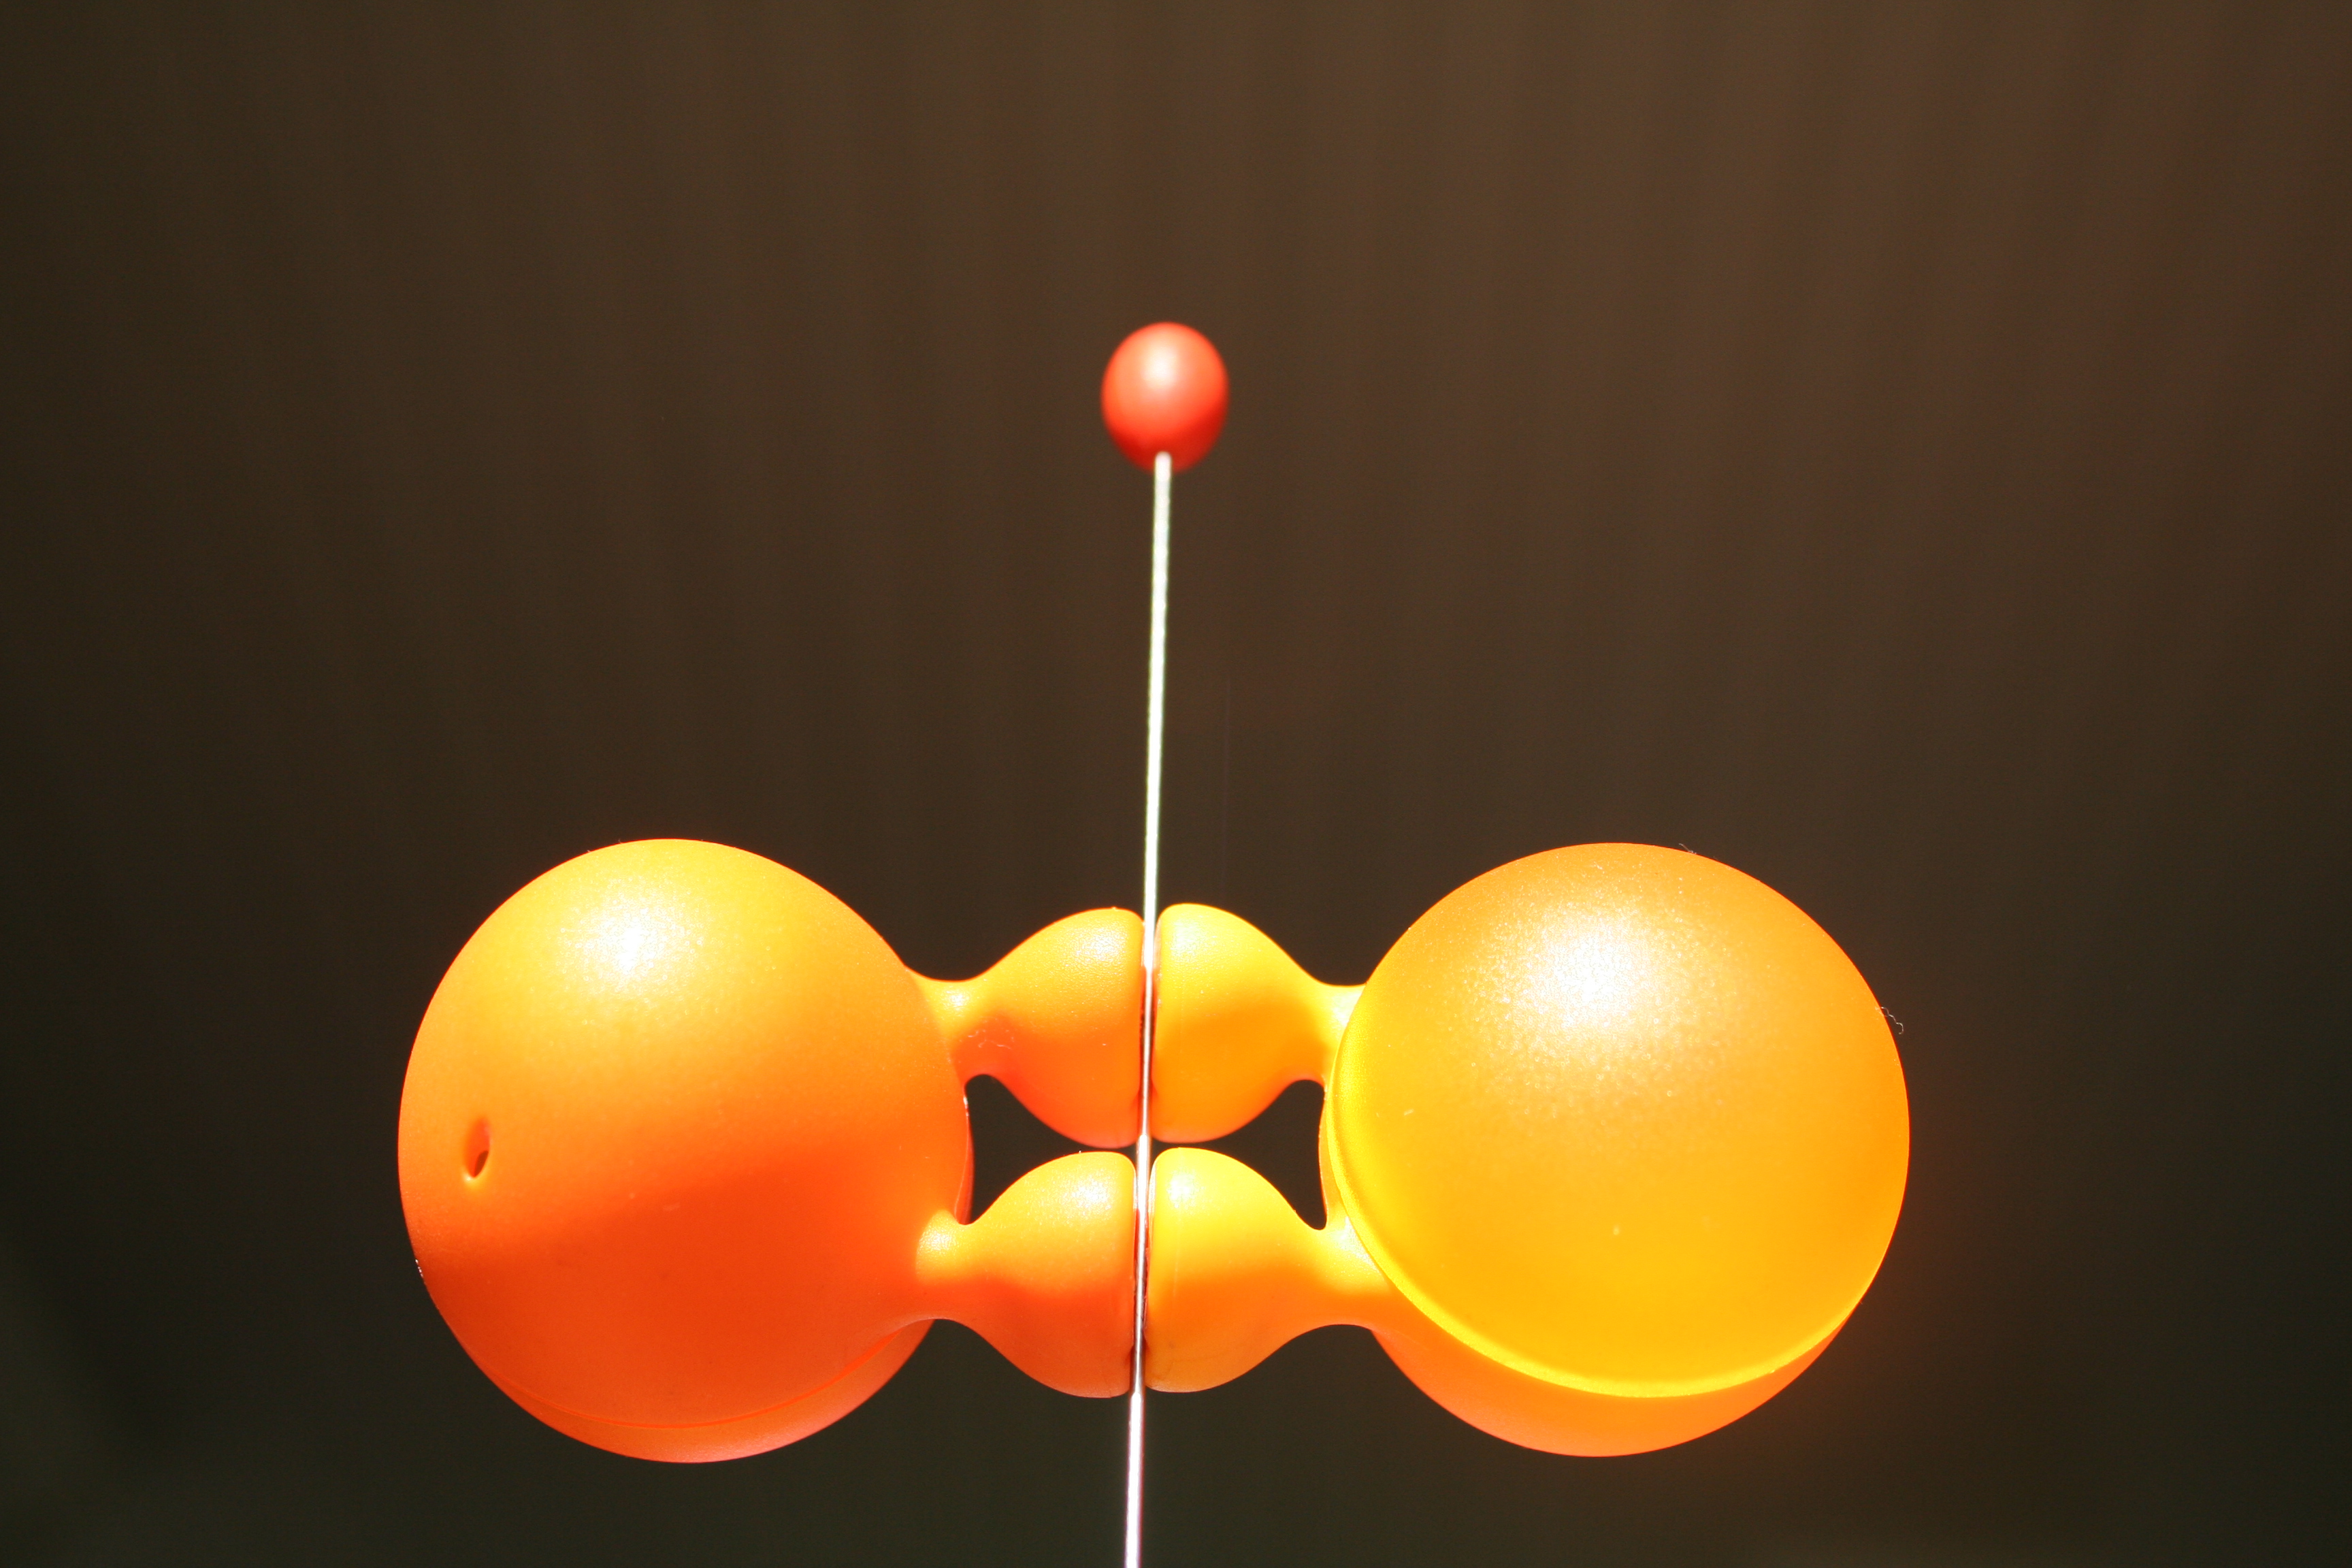 Free photo: Orange objects - Antenna, Objects, Orange - Free Download ...